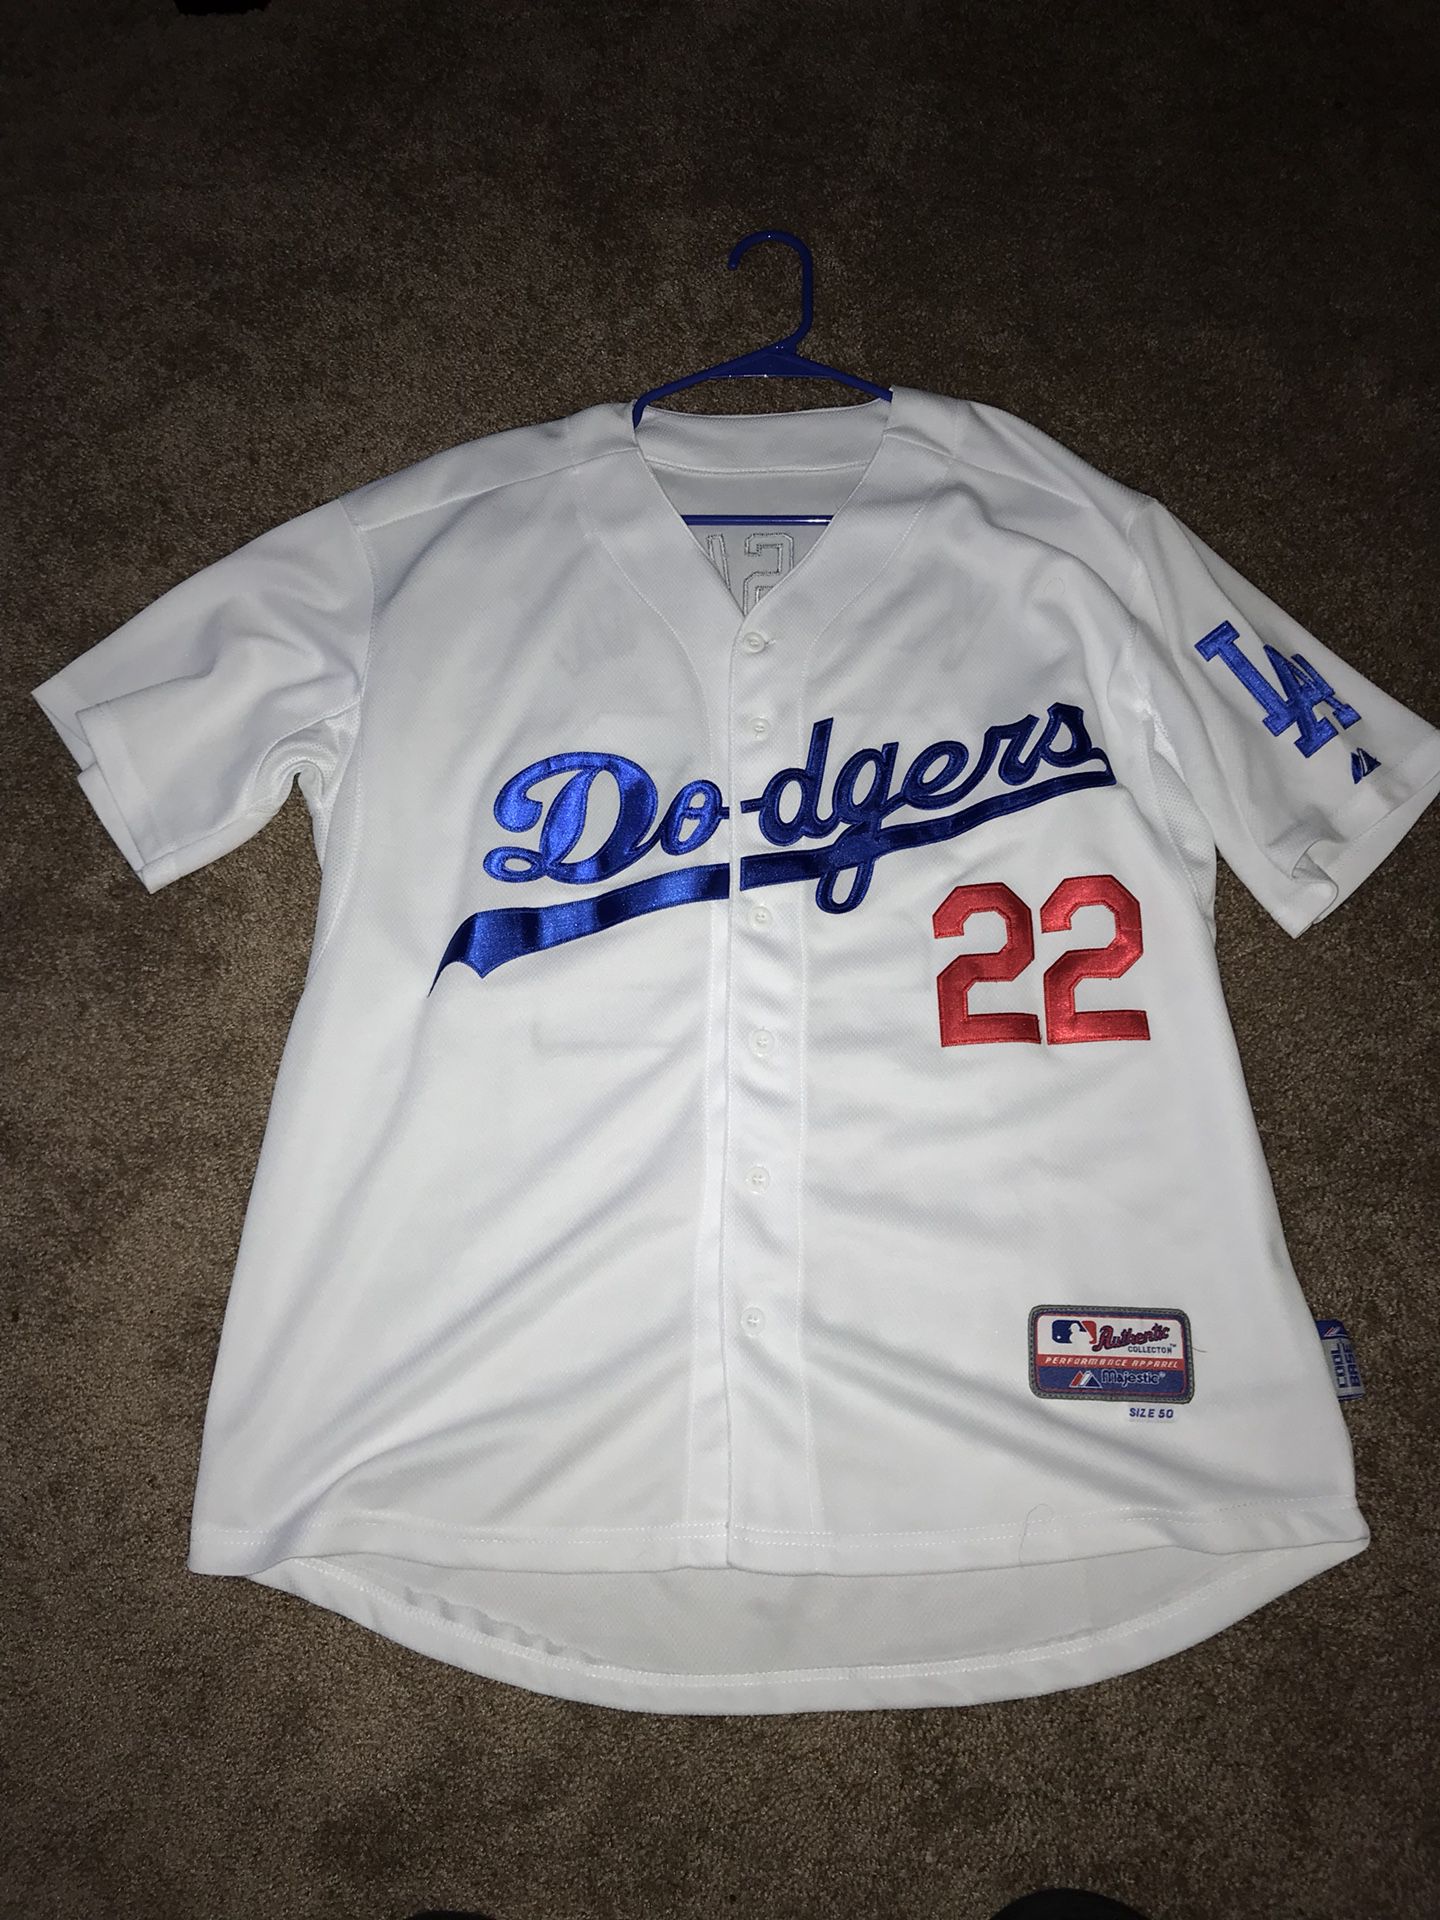 LA dodgers jersey MLB Kershaw for Sale in Modesto, CA - OfferUp